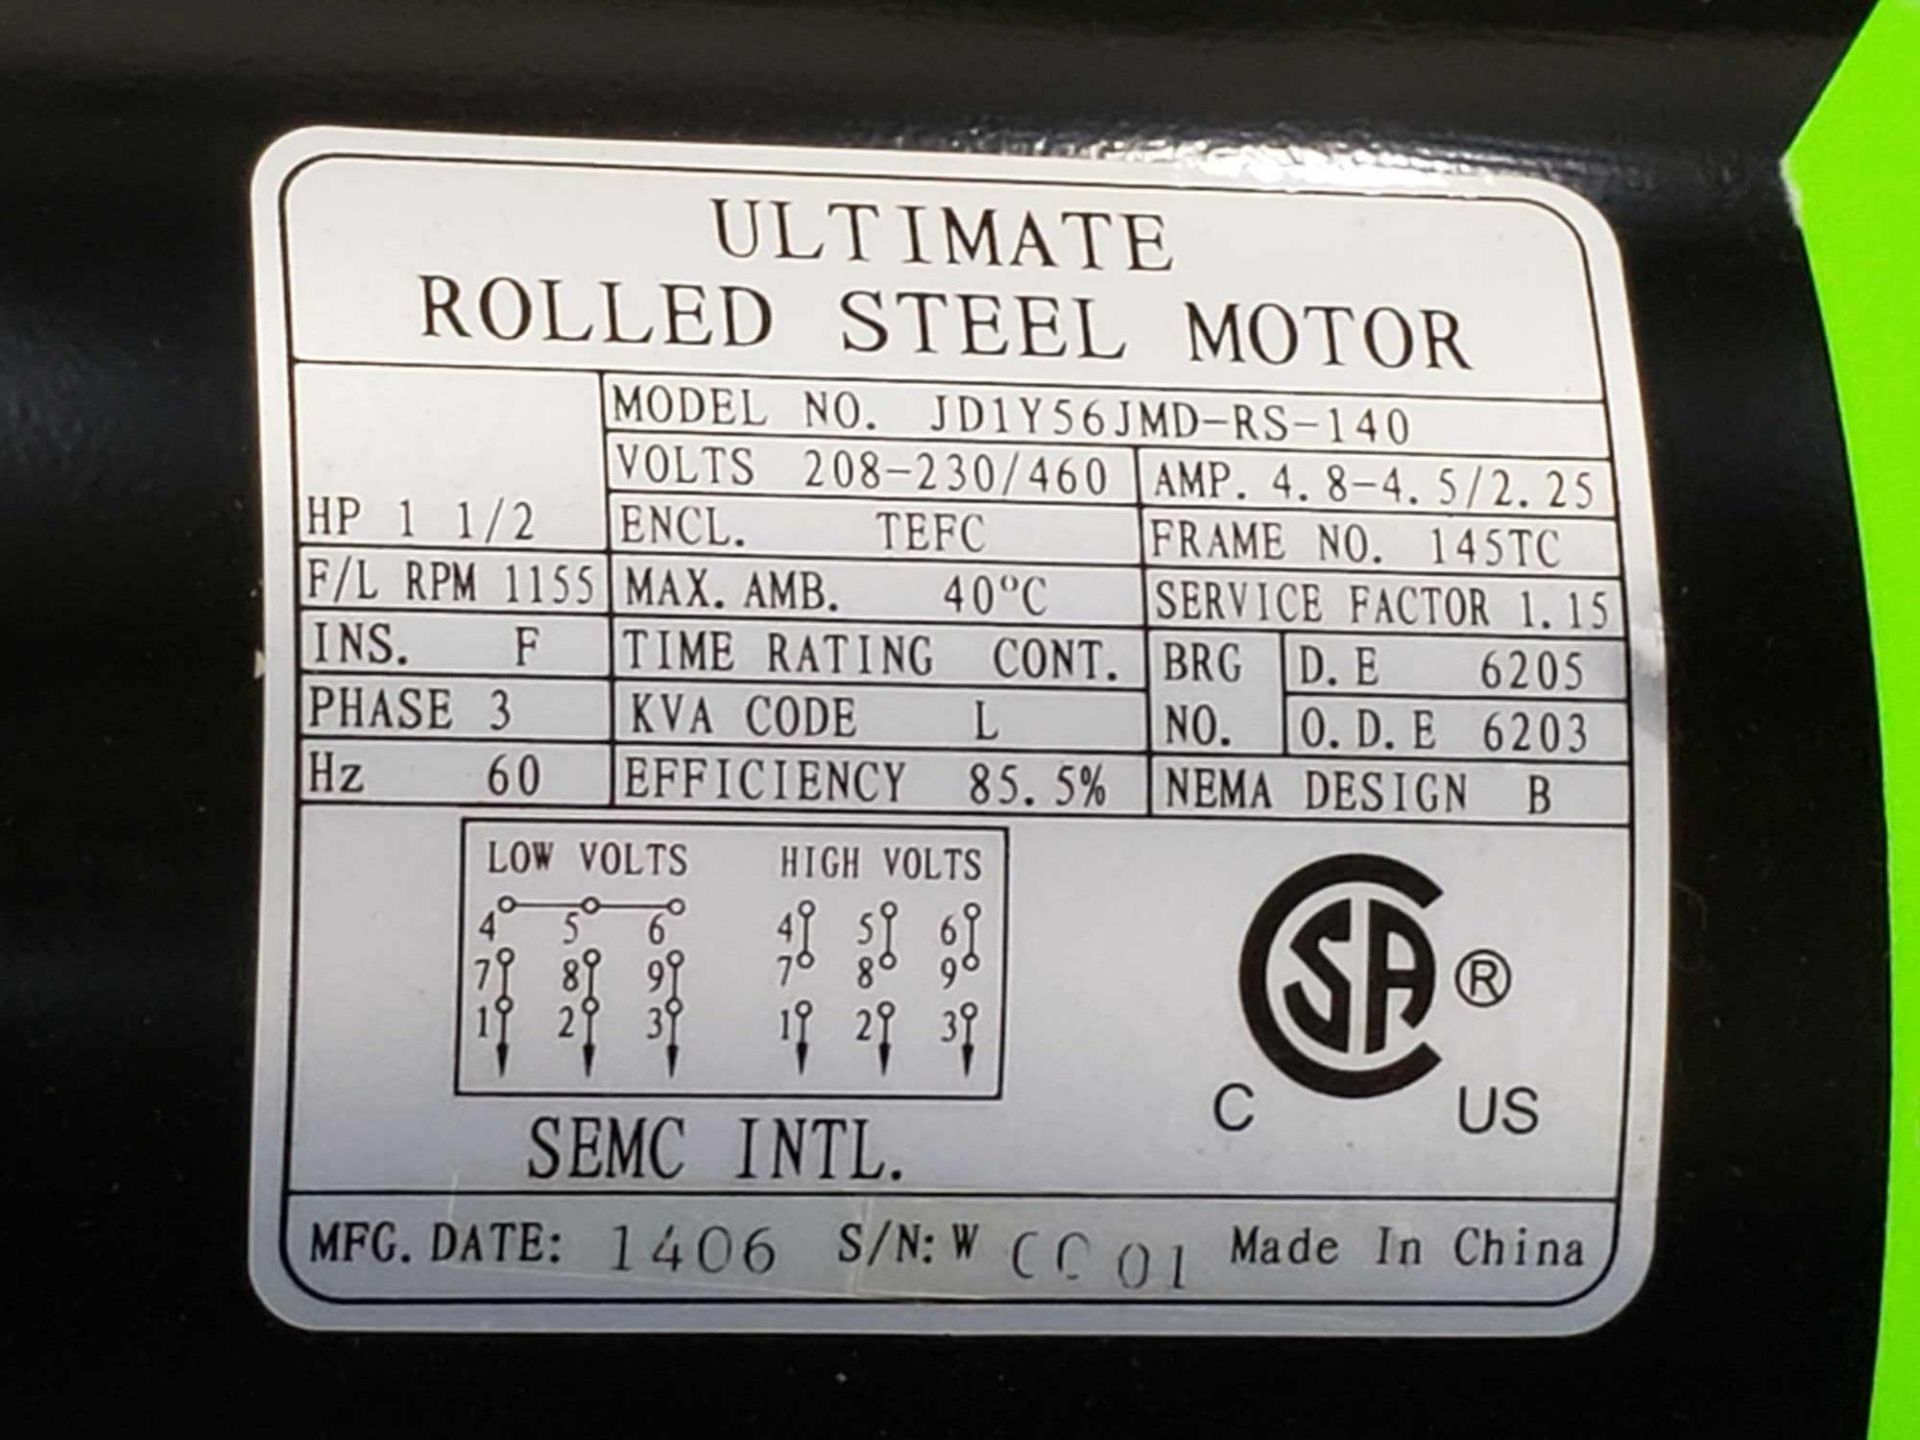 1 1/2hp Ultimate Rolled Steel Motor model JD1y56jmd-rs-140. 208-230/460V 3 phase, 1155rpm, 145TC. - Image 2 of 2